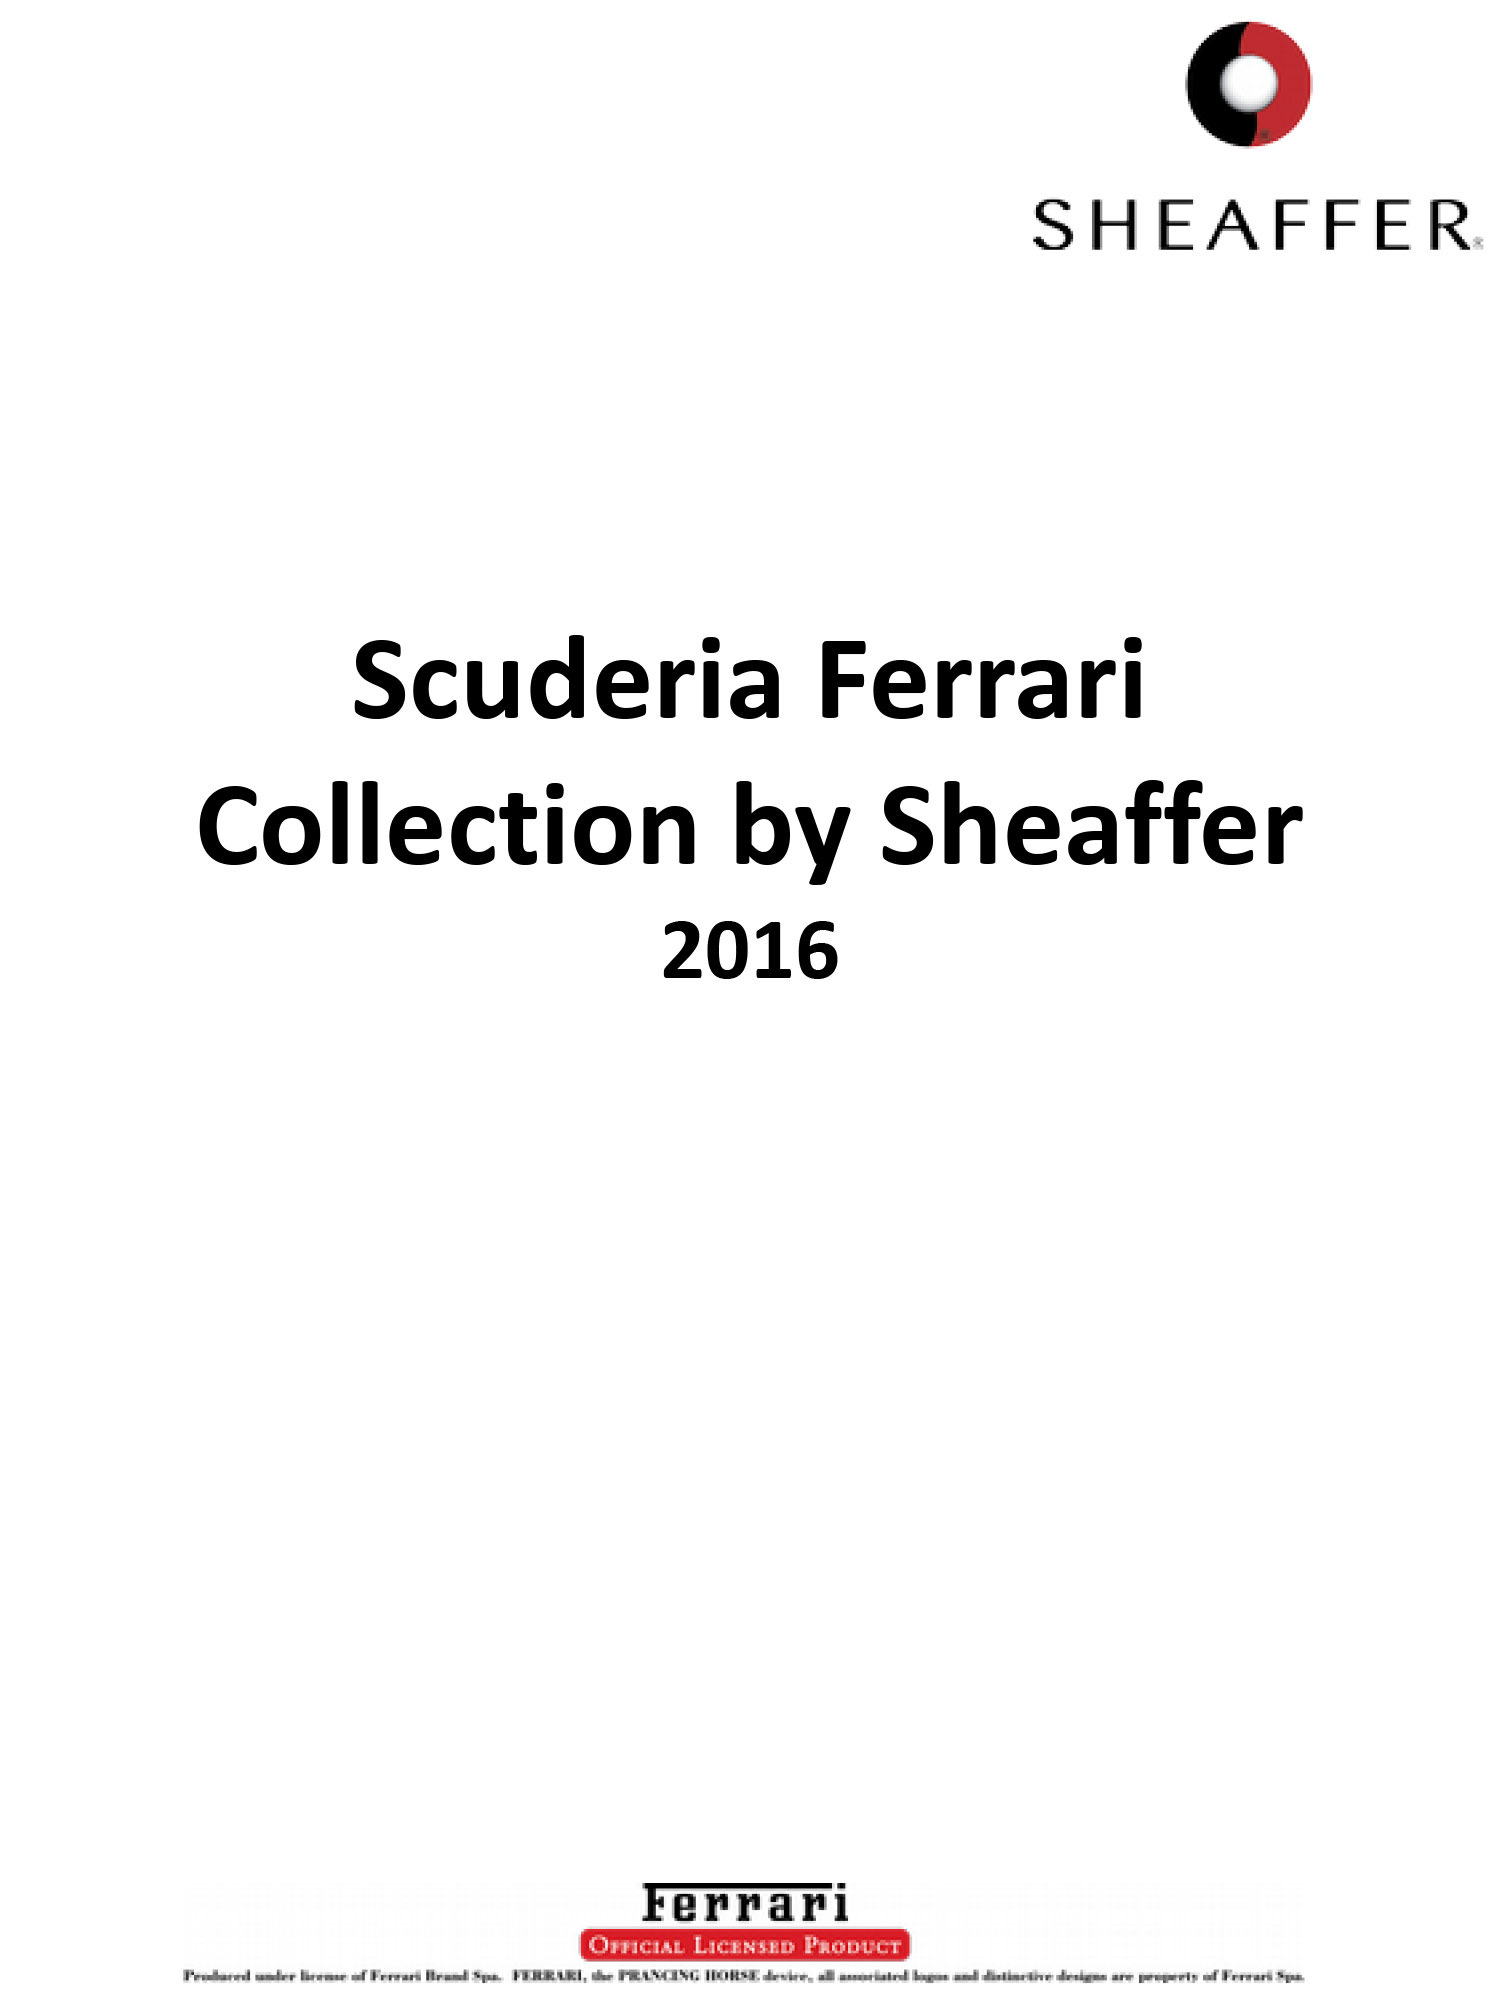 Catalog Ferrari by Sheaffer 2016